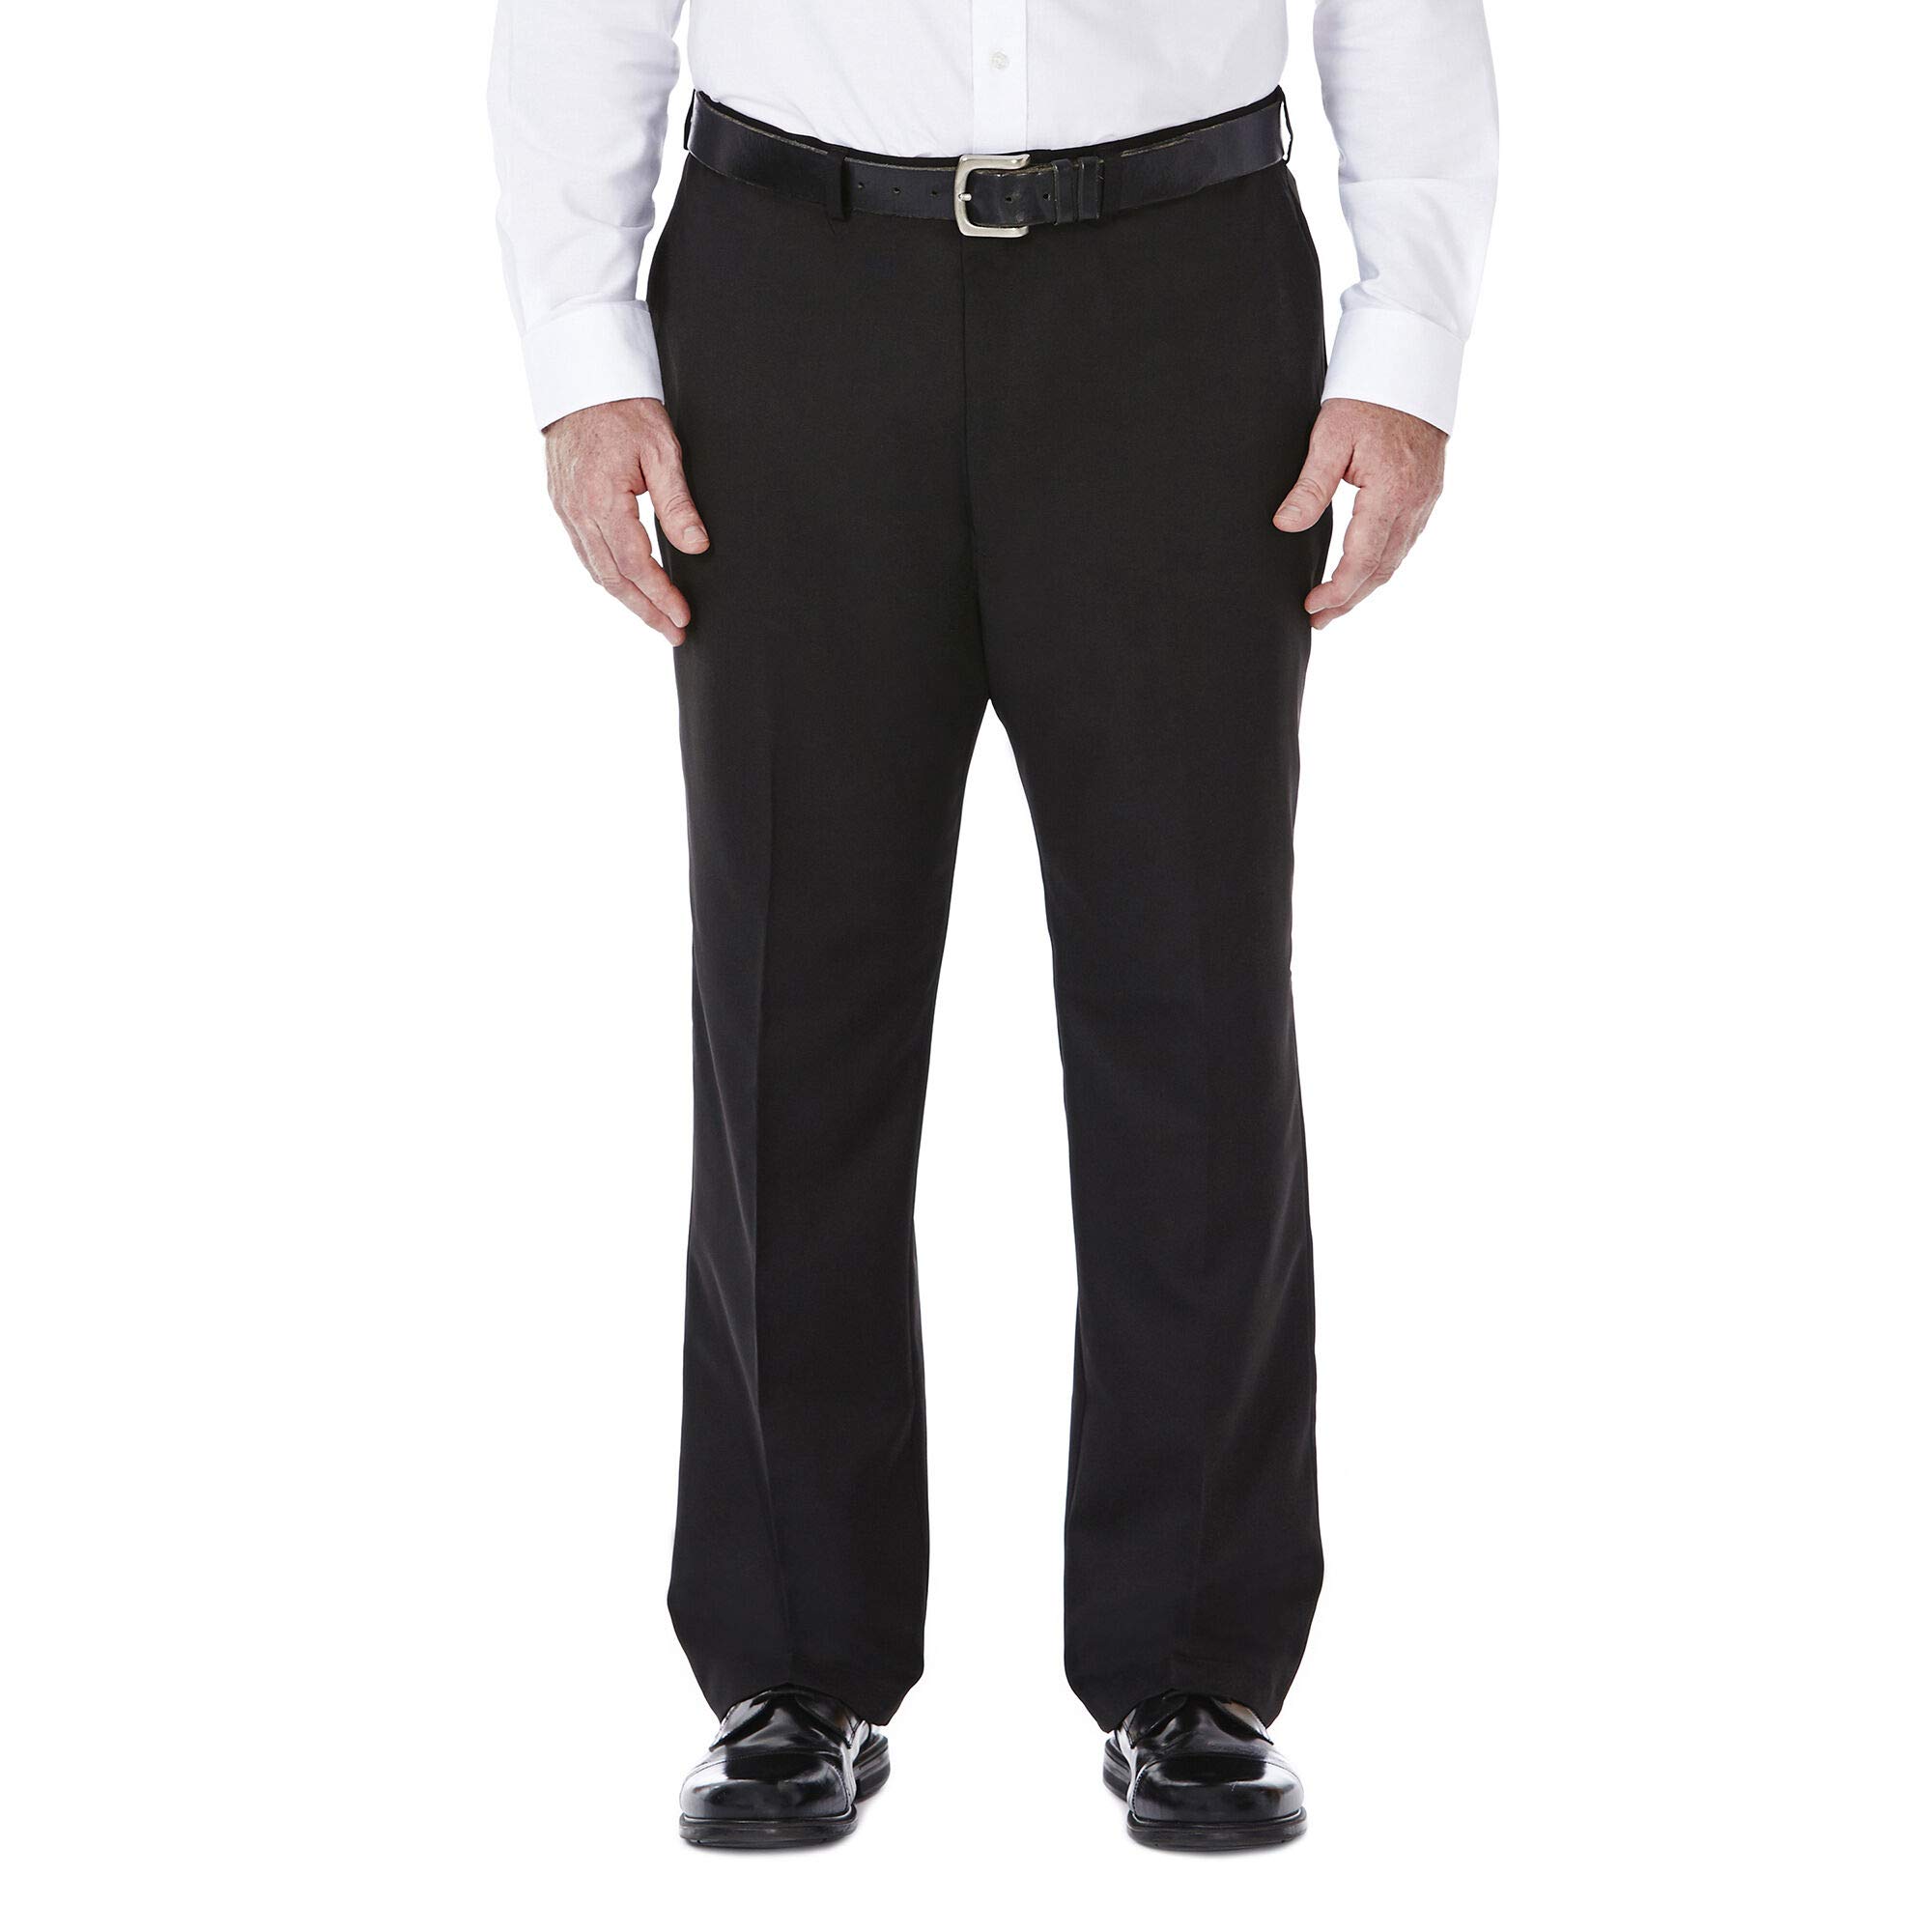 Haggar Men's Cool 18 Flat Front Pant Reg. and Big & Tall Sizes